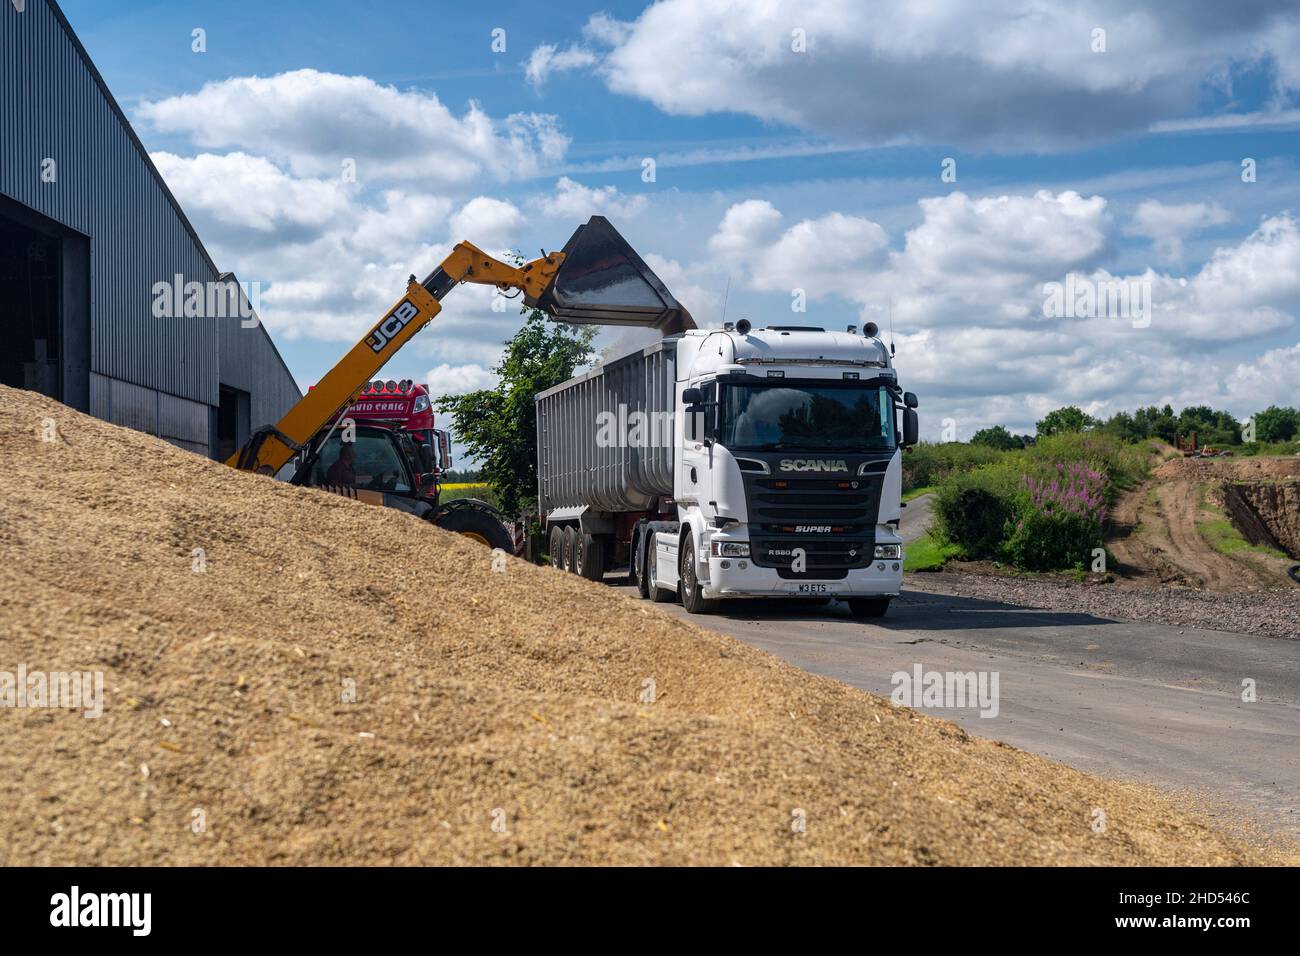 Loading wheat into lorry trailer. Stock Photo